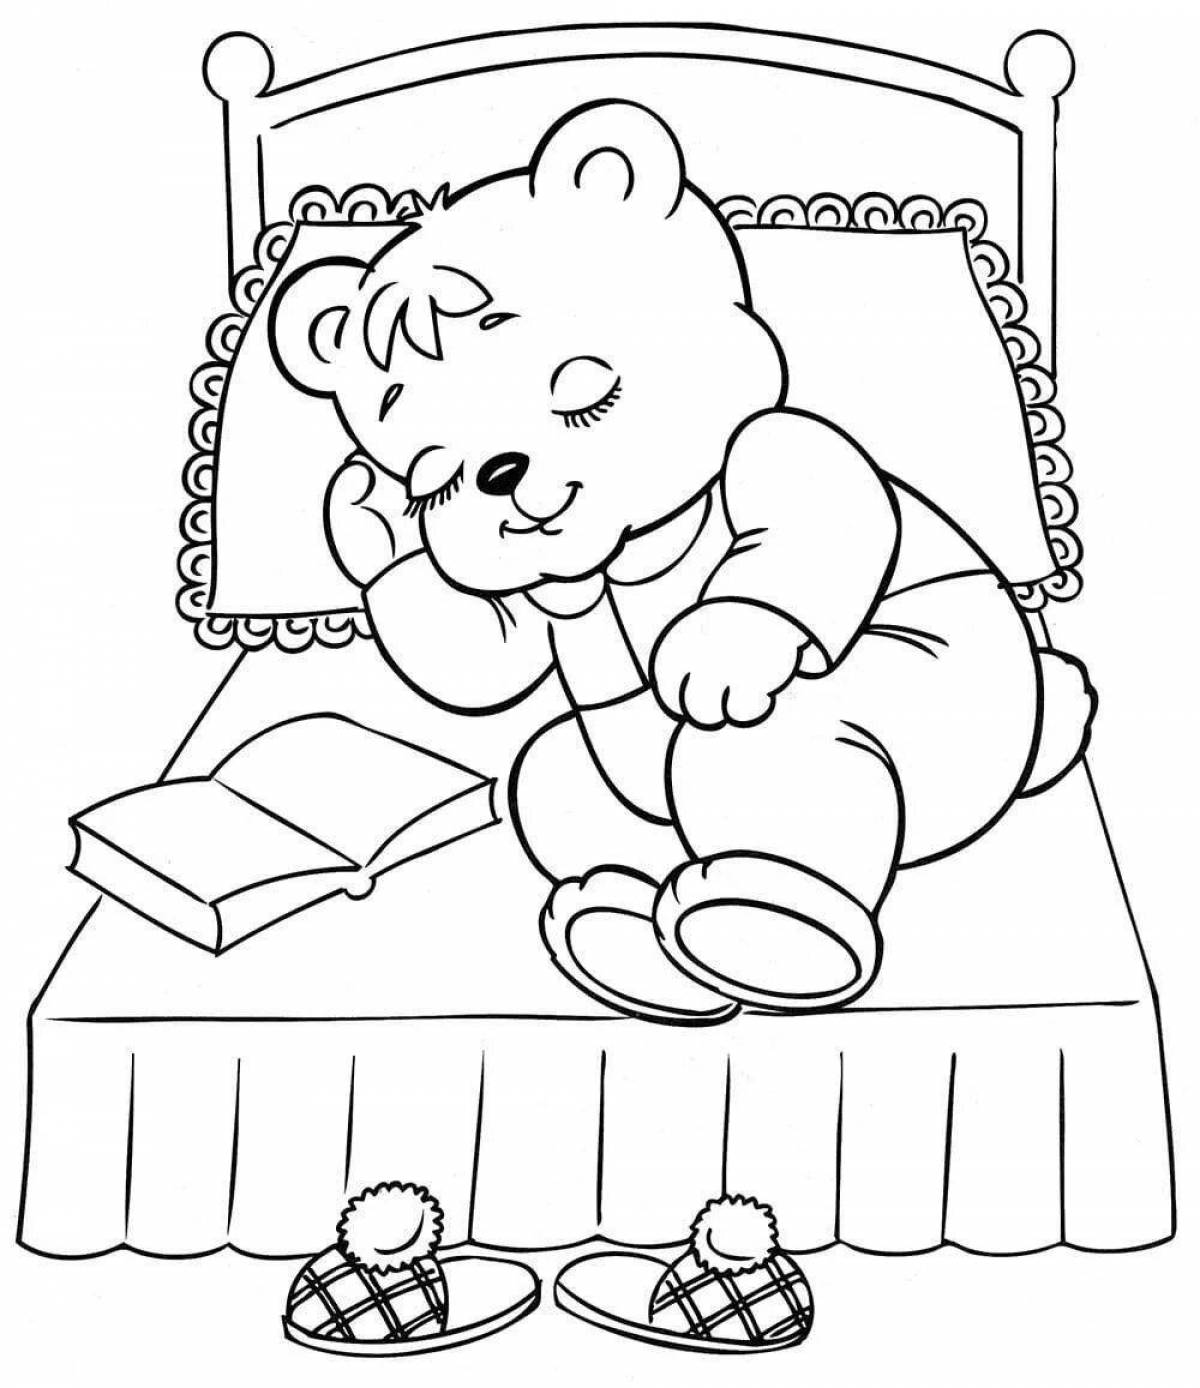 Coloring page cozy teddy bear sleeping